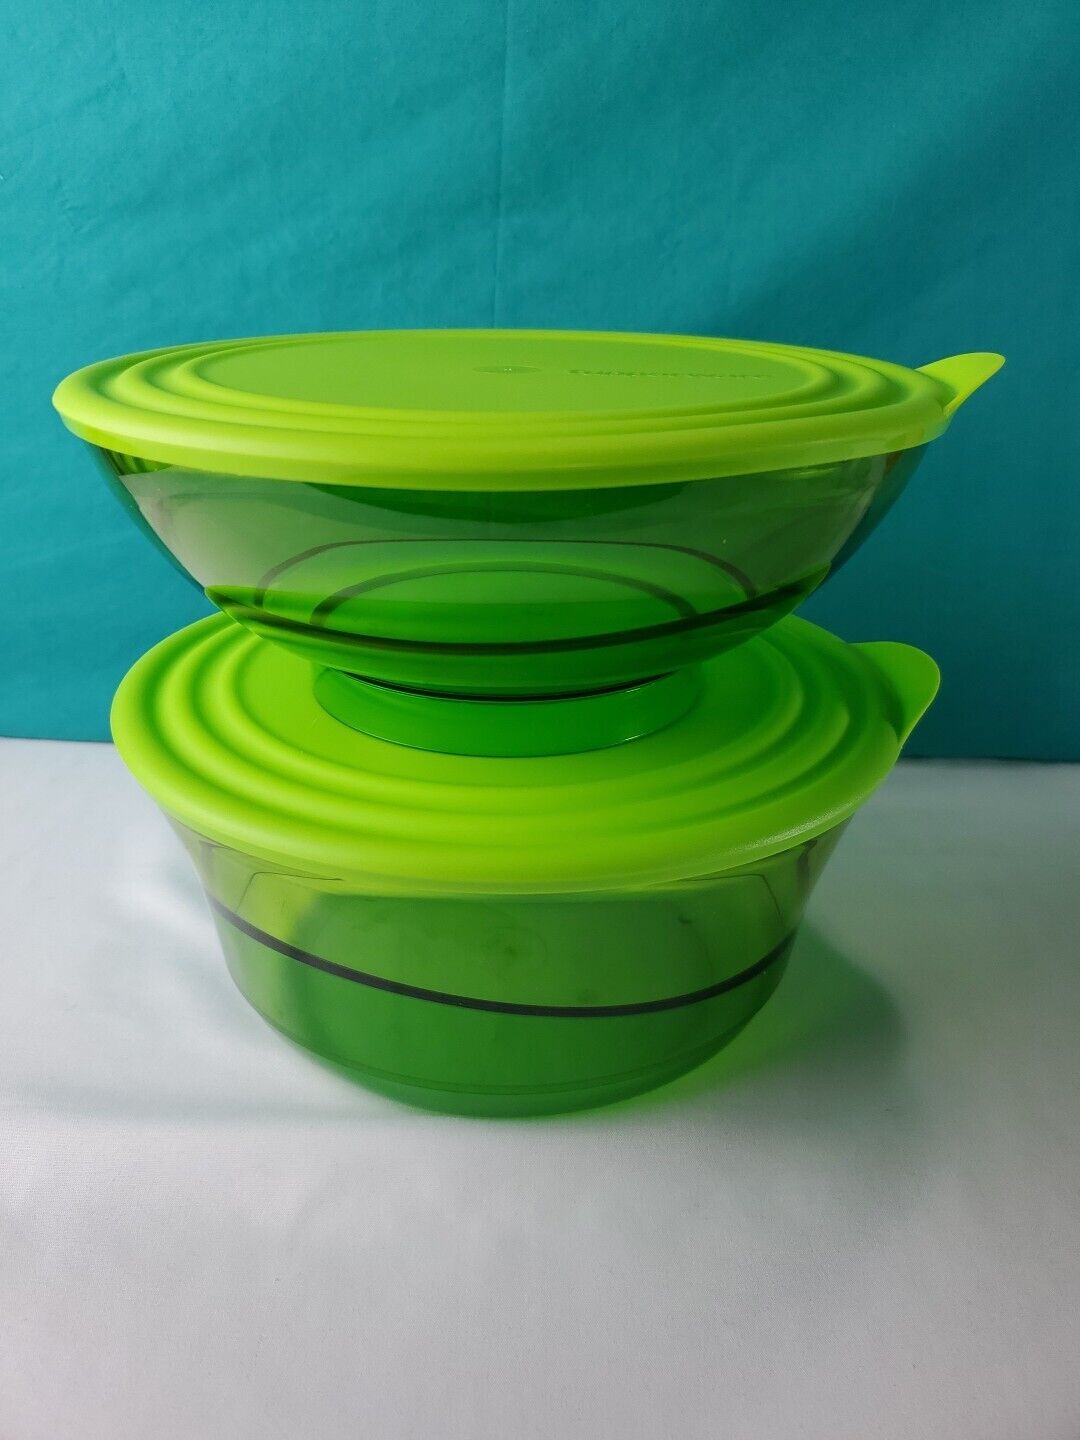 Tupperware Sheerly Elegant Deluxe Acrylic Eleganzia Serving Bowl Set Green 